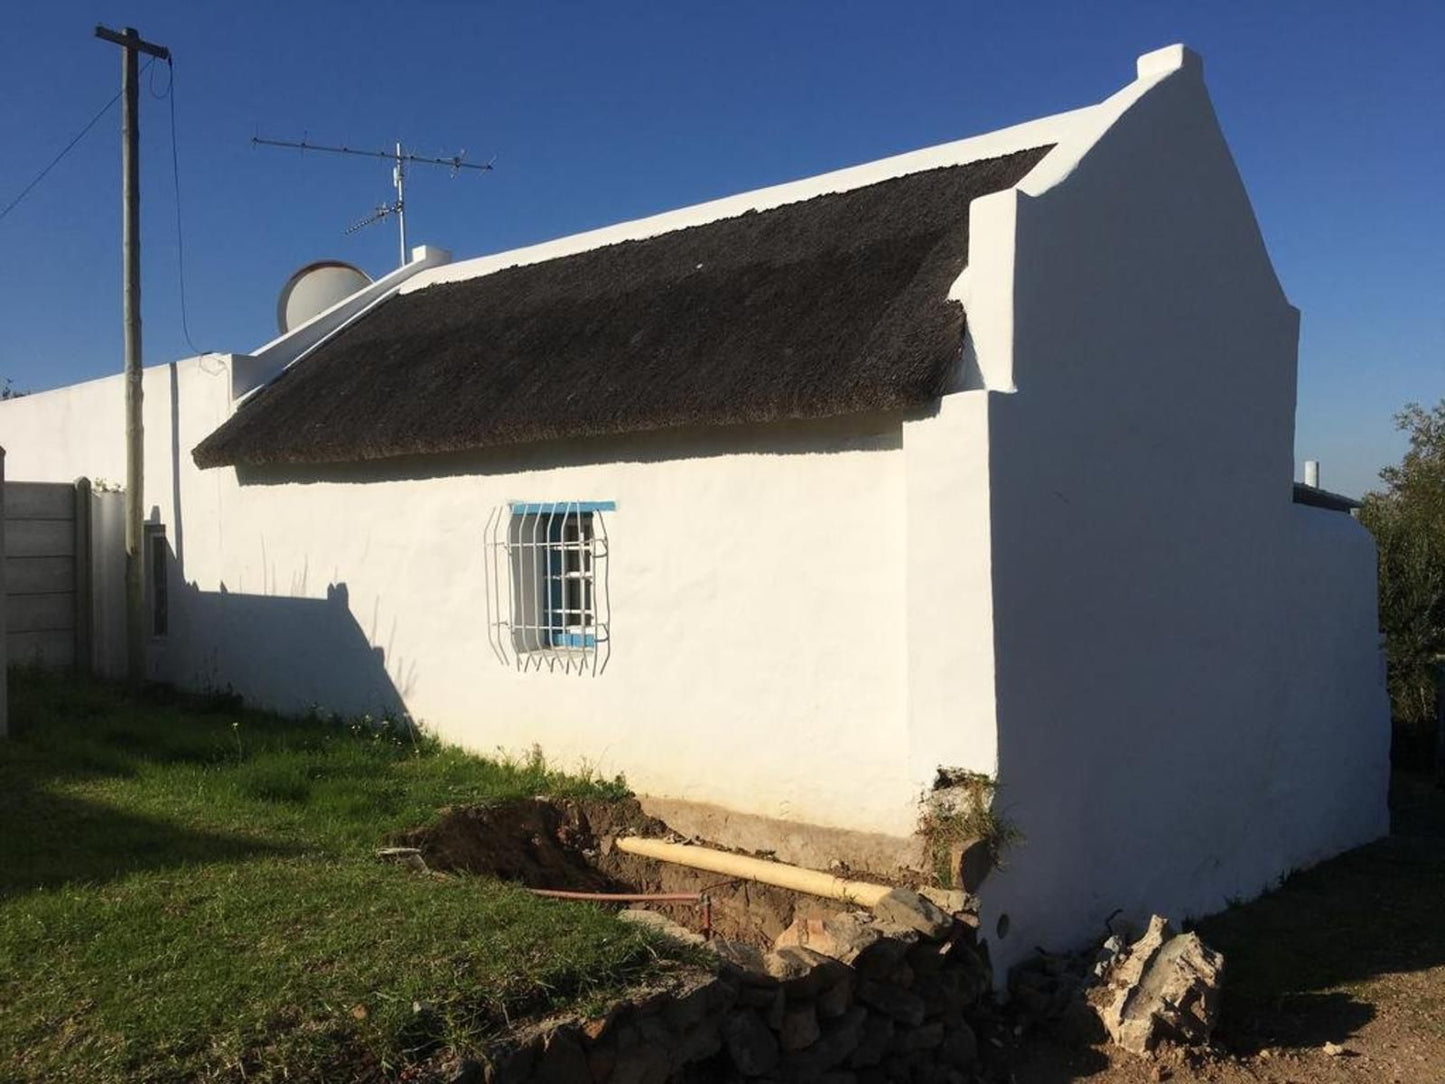 Carneddie Cottage Bredasdorp Western Cape South Africa Building, Architecture, House